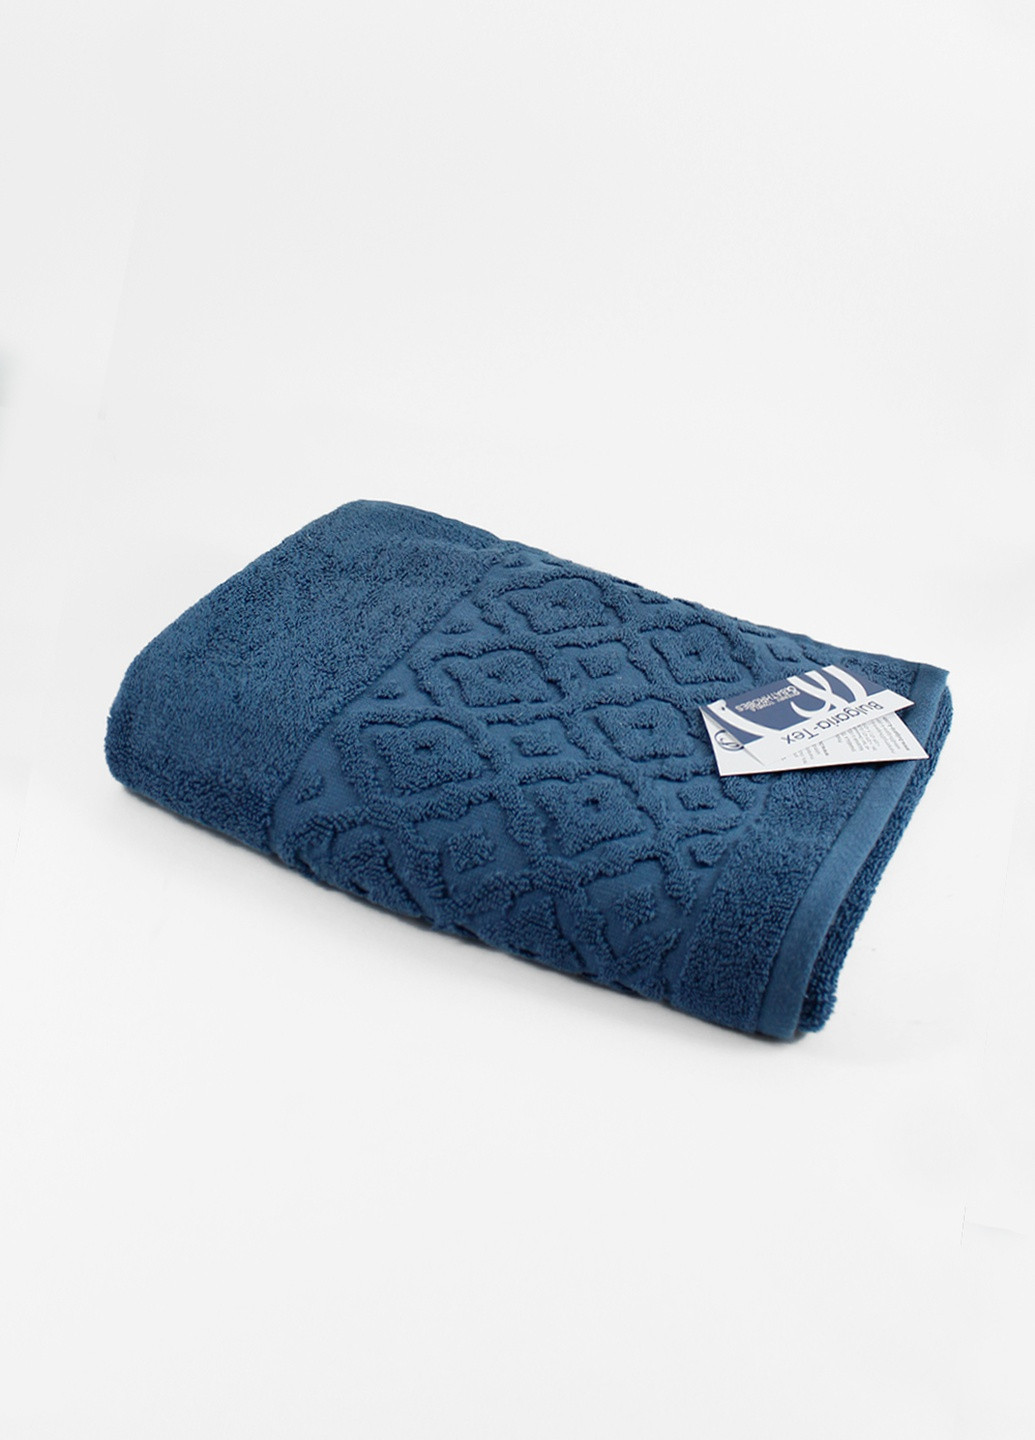 Bulgaria-Tex полотенце махровое lima, жаккардовое, с бордюром, деним, размер 50x90 cm синий производство - Болгария